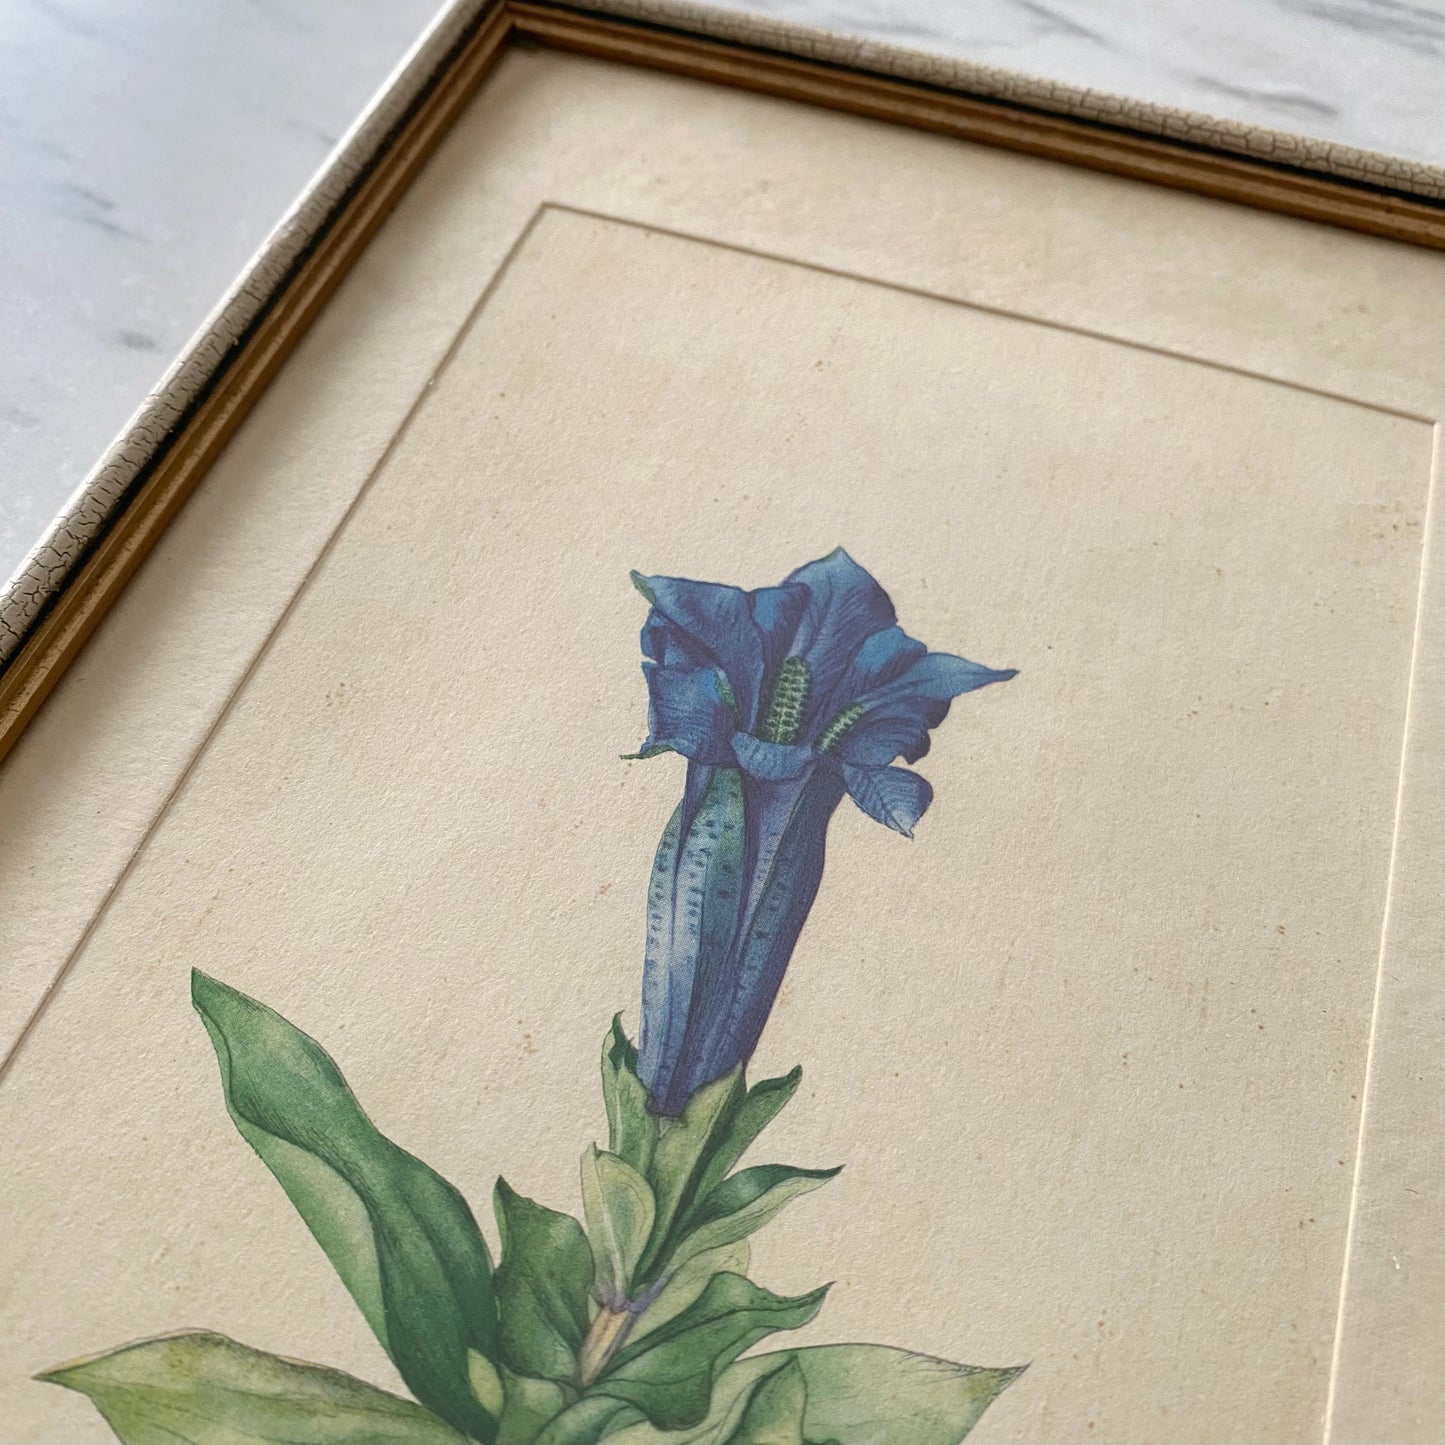 Vintage Framed Mountain Flower Print